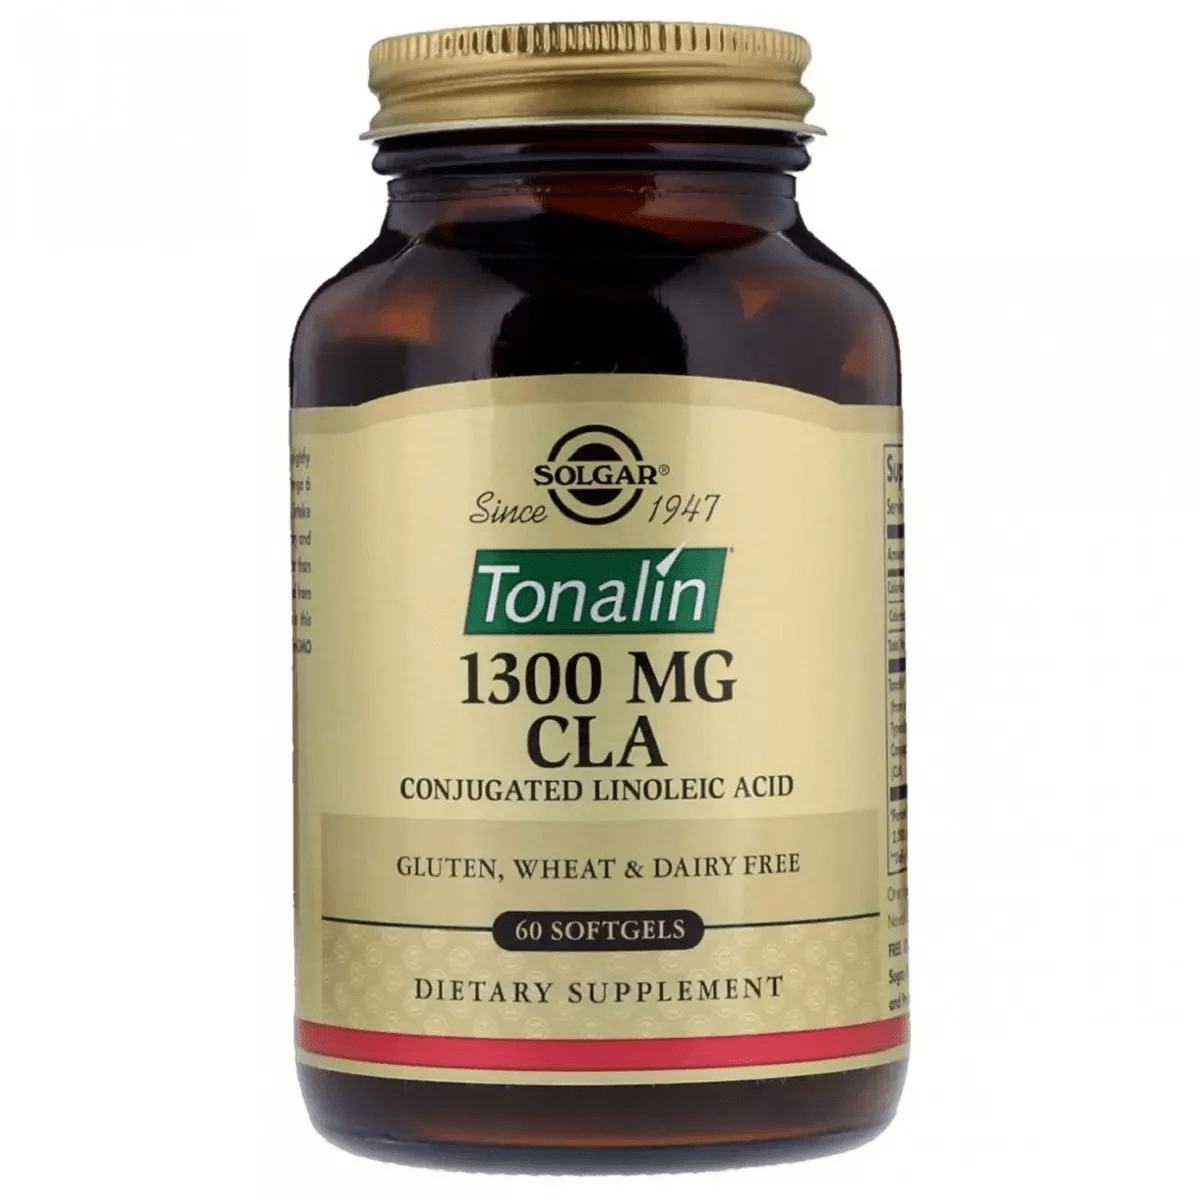 Конъюгированная линолевая кислота Solgar Tonalin CLA 1300 mg 60 Softgels,  ml, Solgar. Fat Burner. Weight Loss Fat burning 